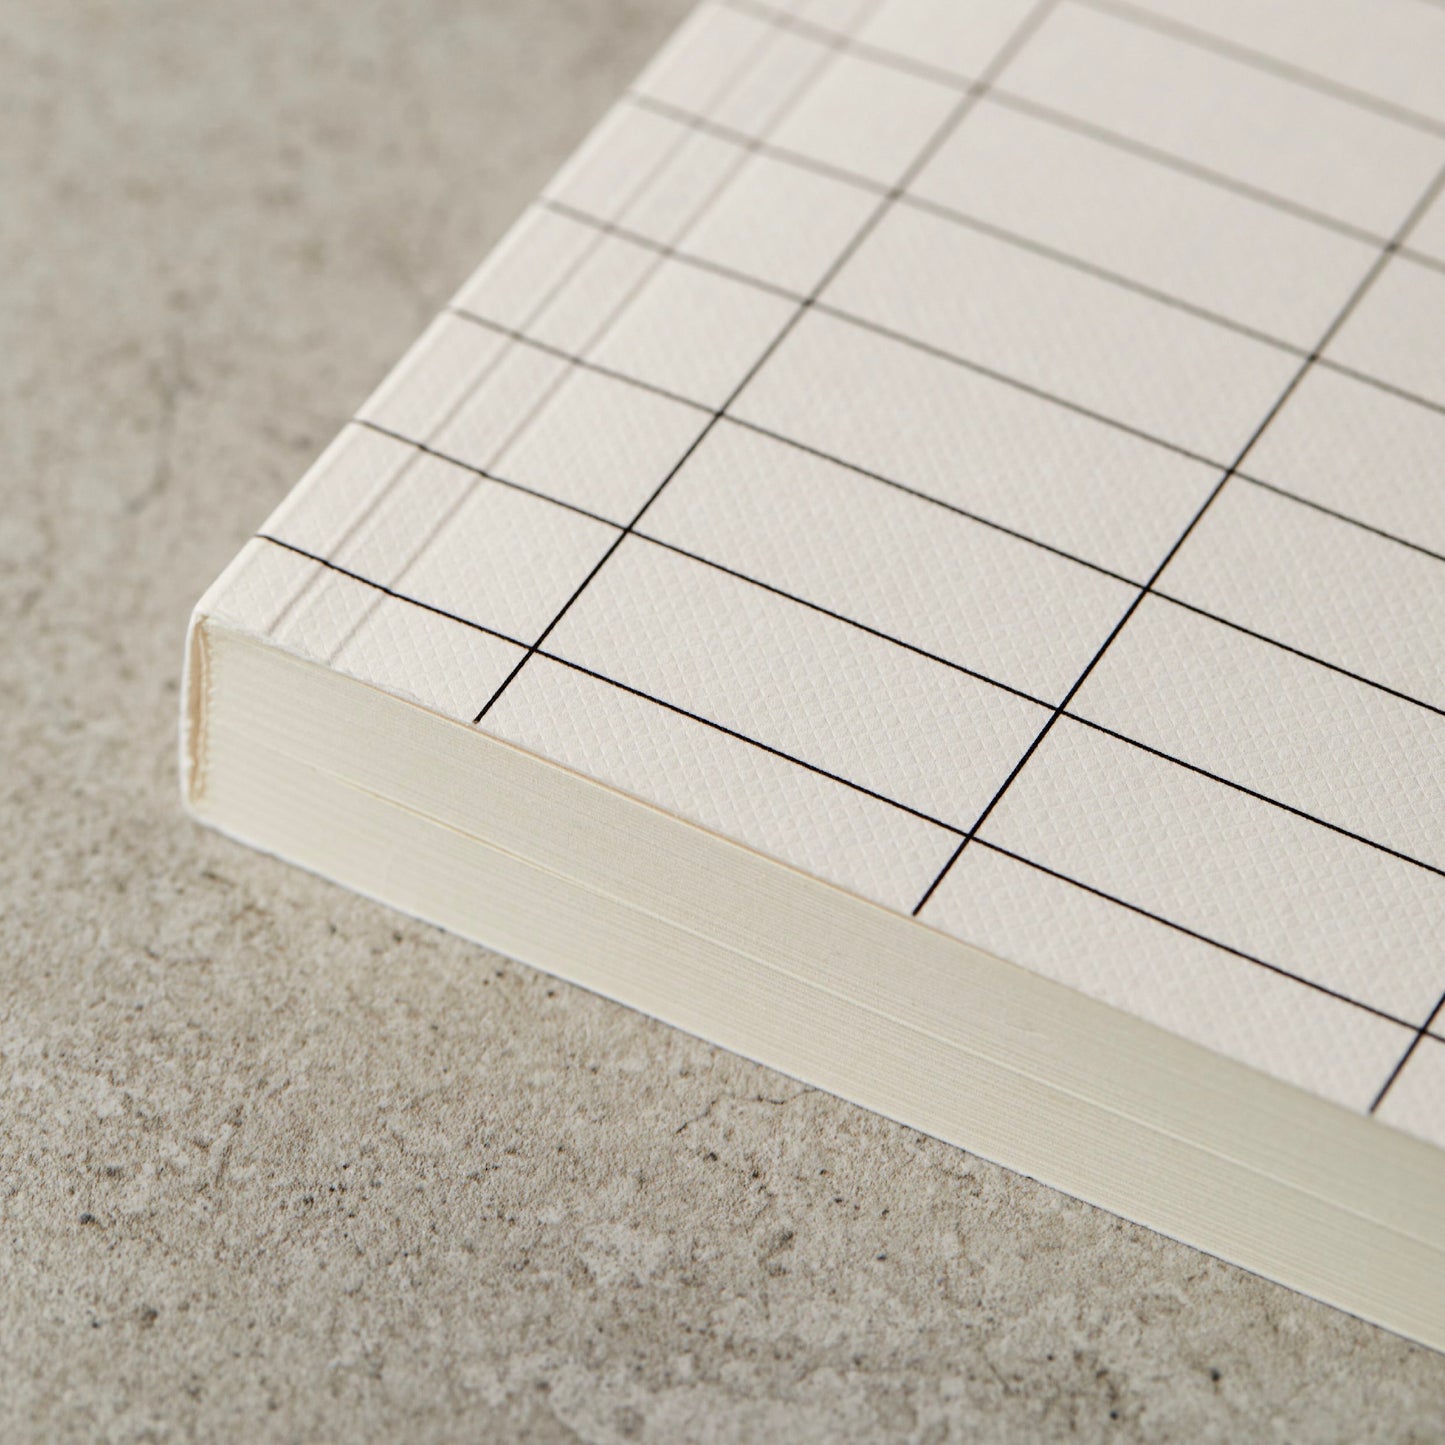 Vol 18: Ivory Grid Notebook